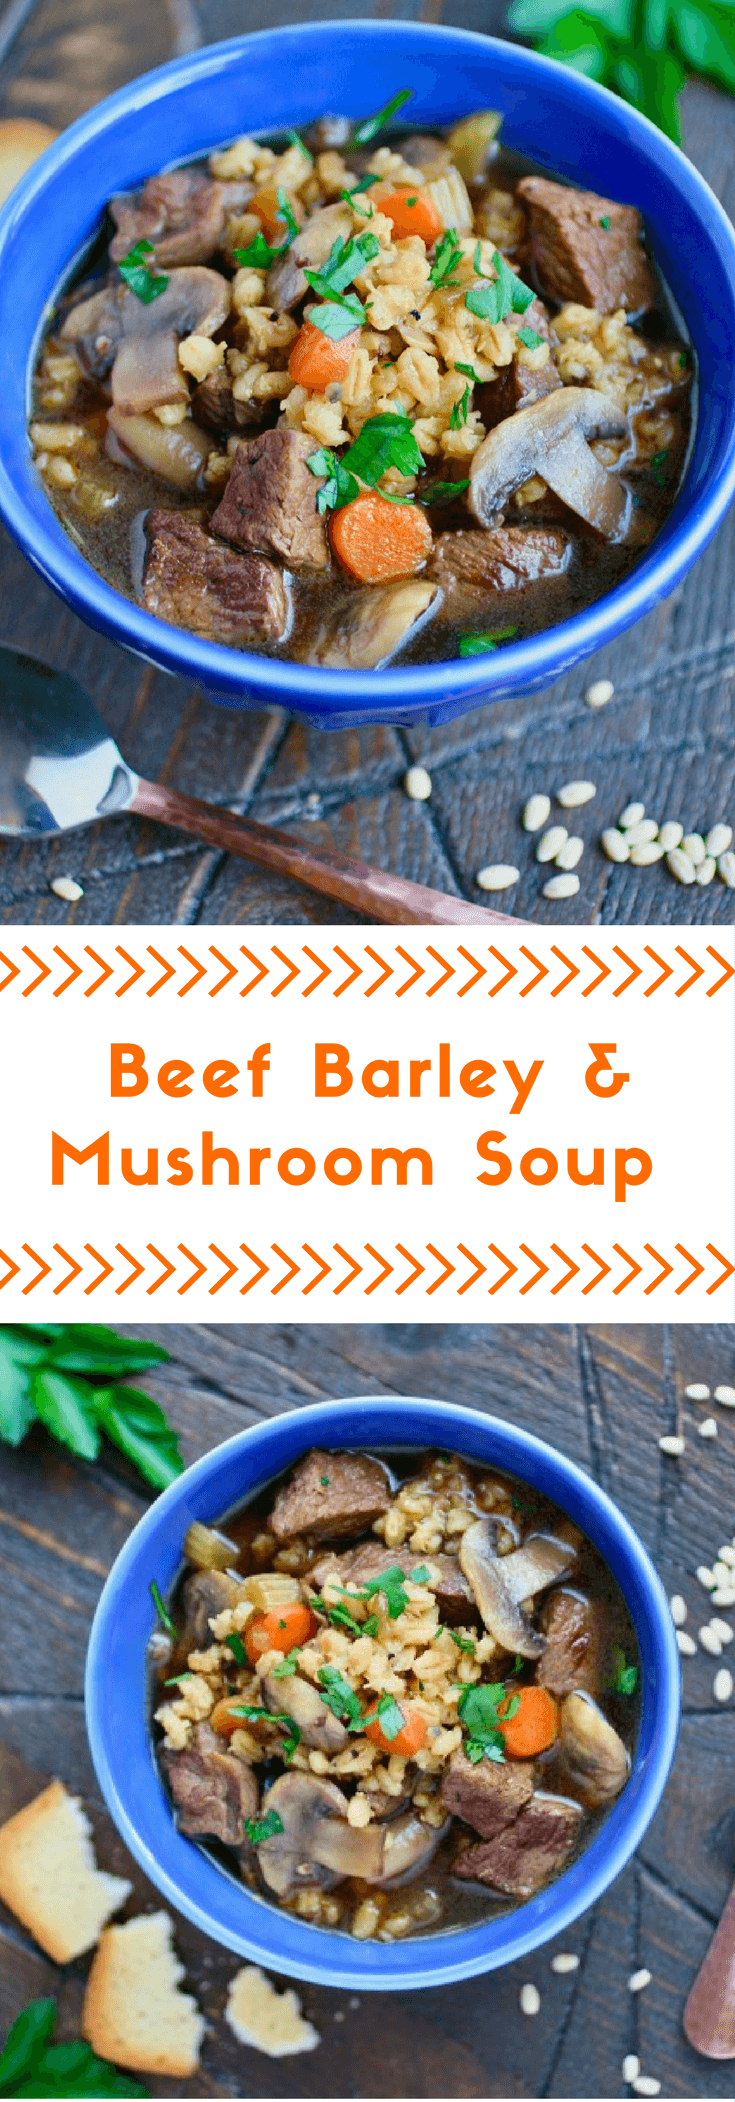 Make a batch of Beef Barley and Mushroom Soup to keep you satisfied!